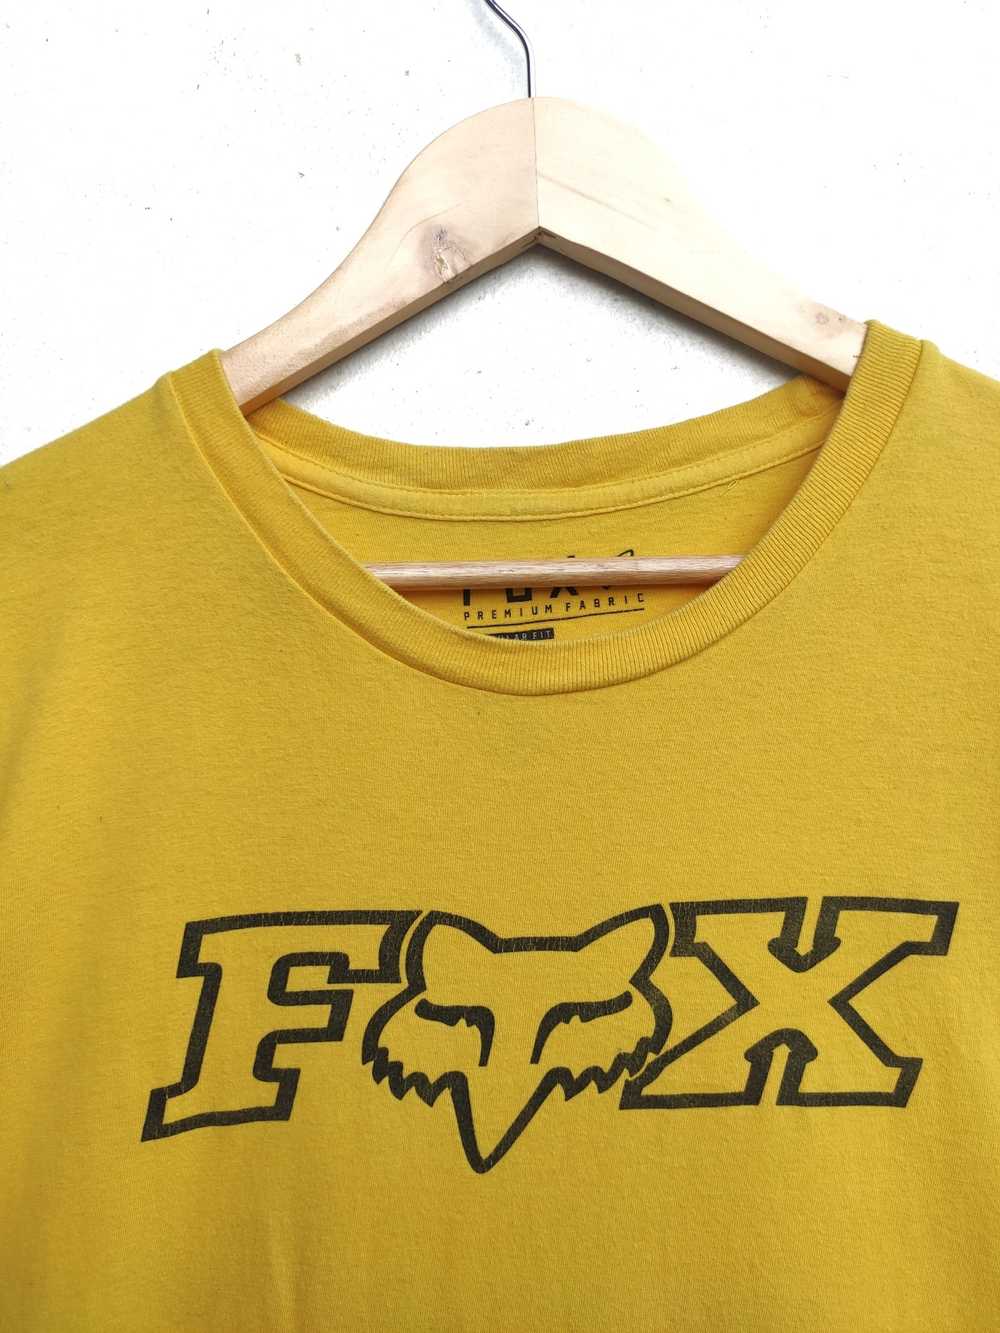 Fox × Fox Racing Vintage Fox Racing t shirt - image 2